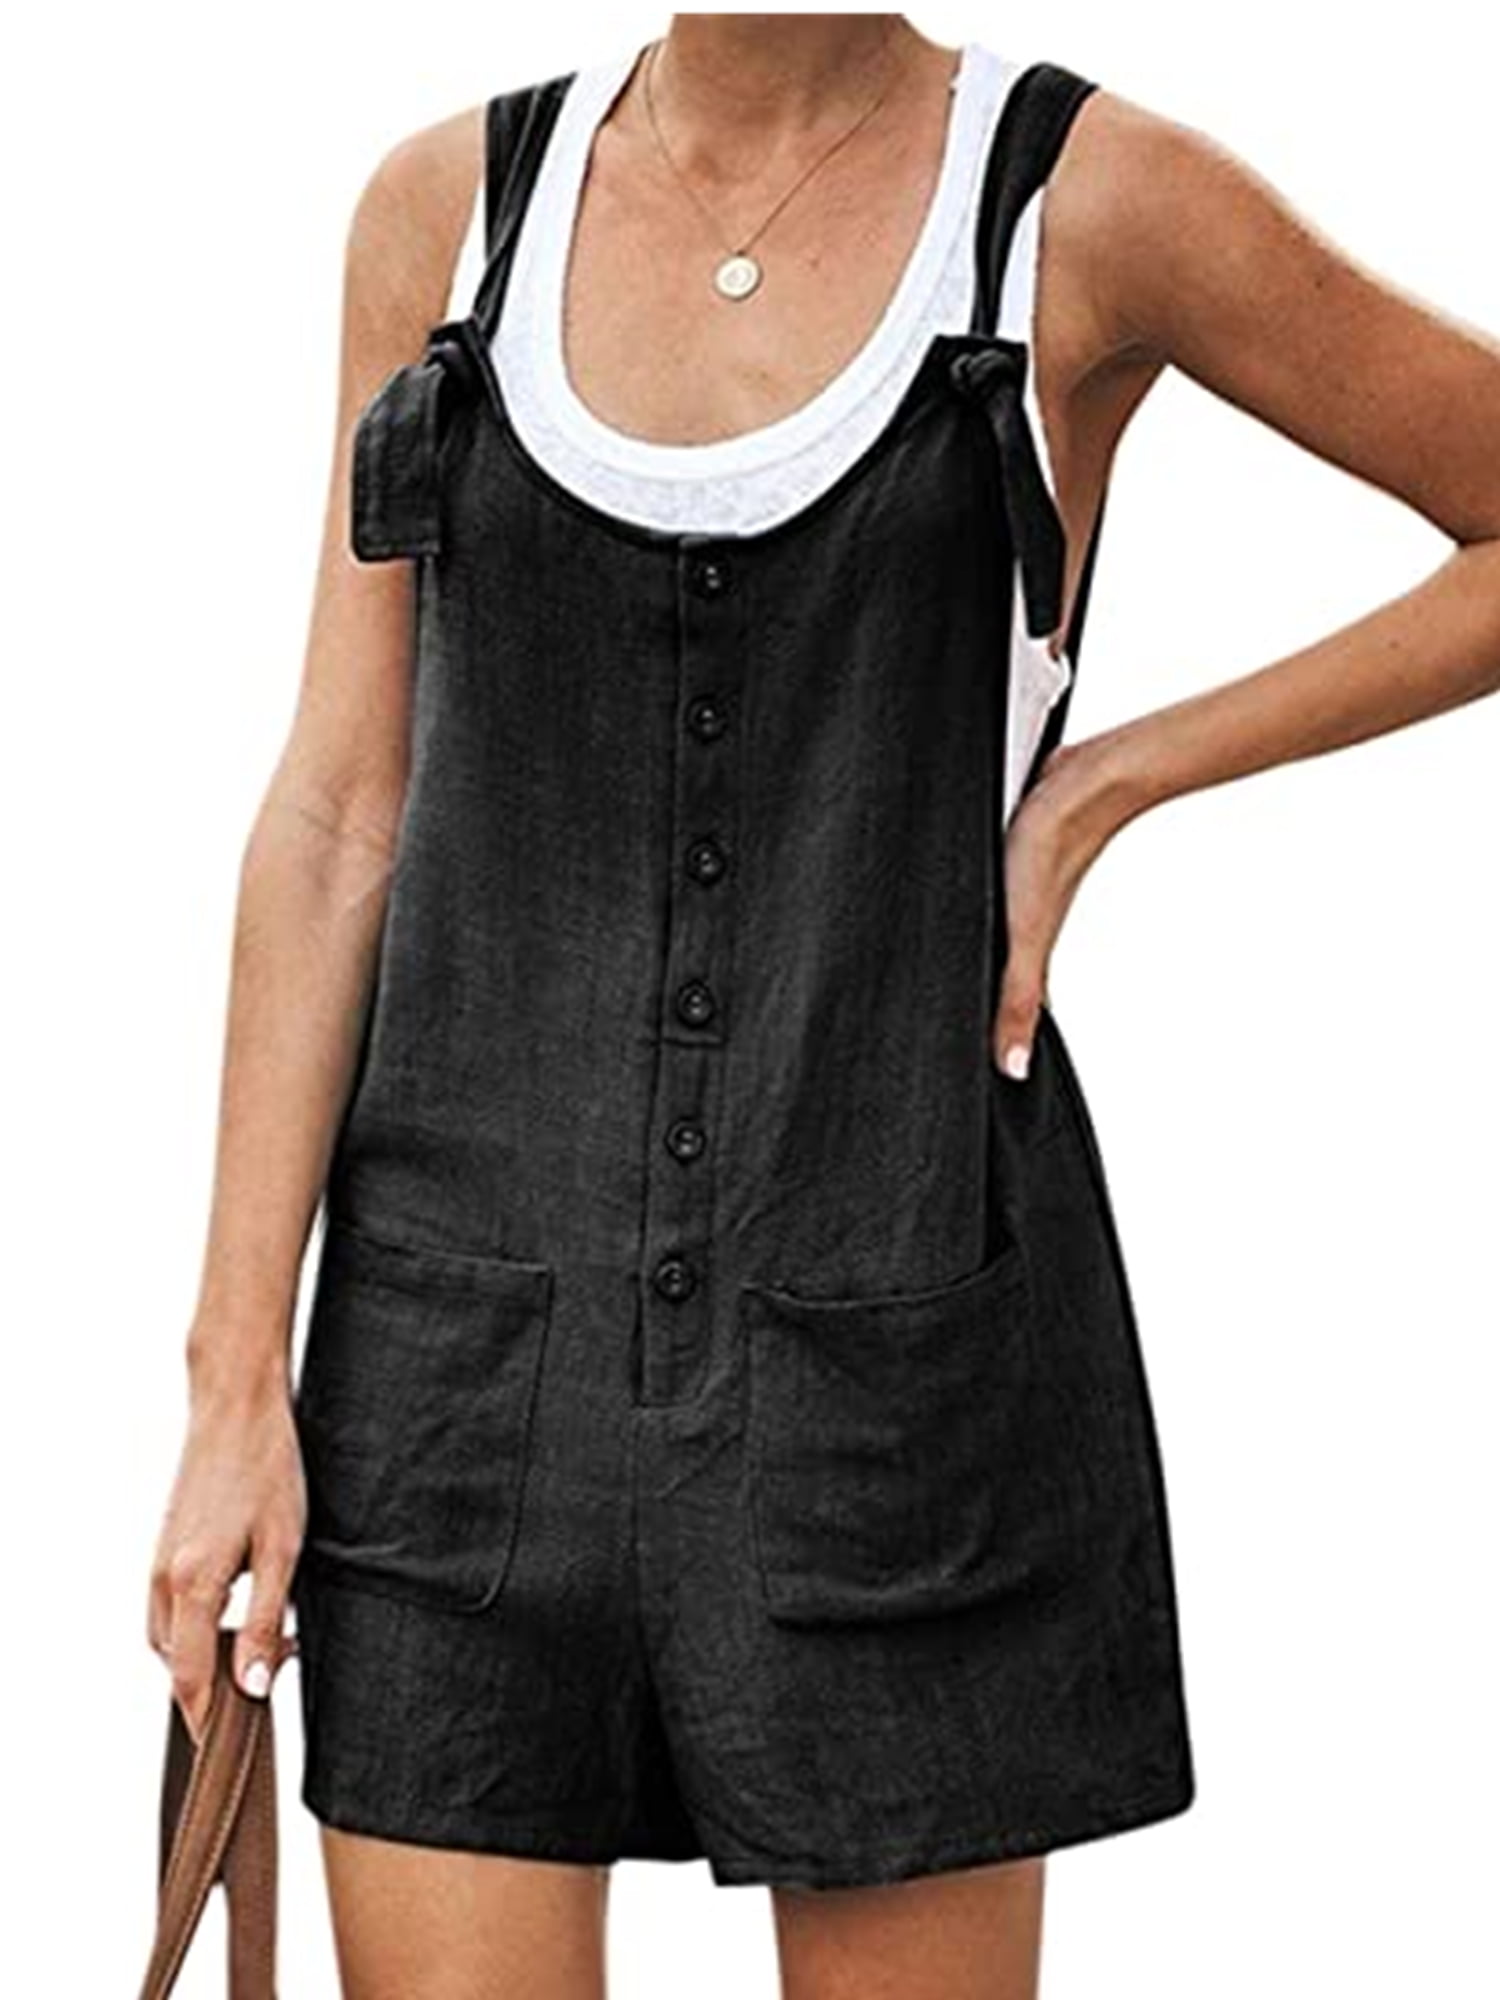 bibss Elegant Solid Jumpsuit Summer Fashion Sleeveless Jumpsuit Rompers Ladies Pockets Overalls Playsuit 